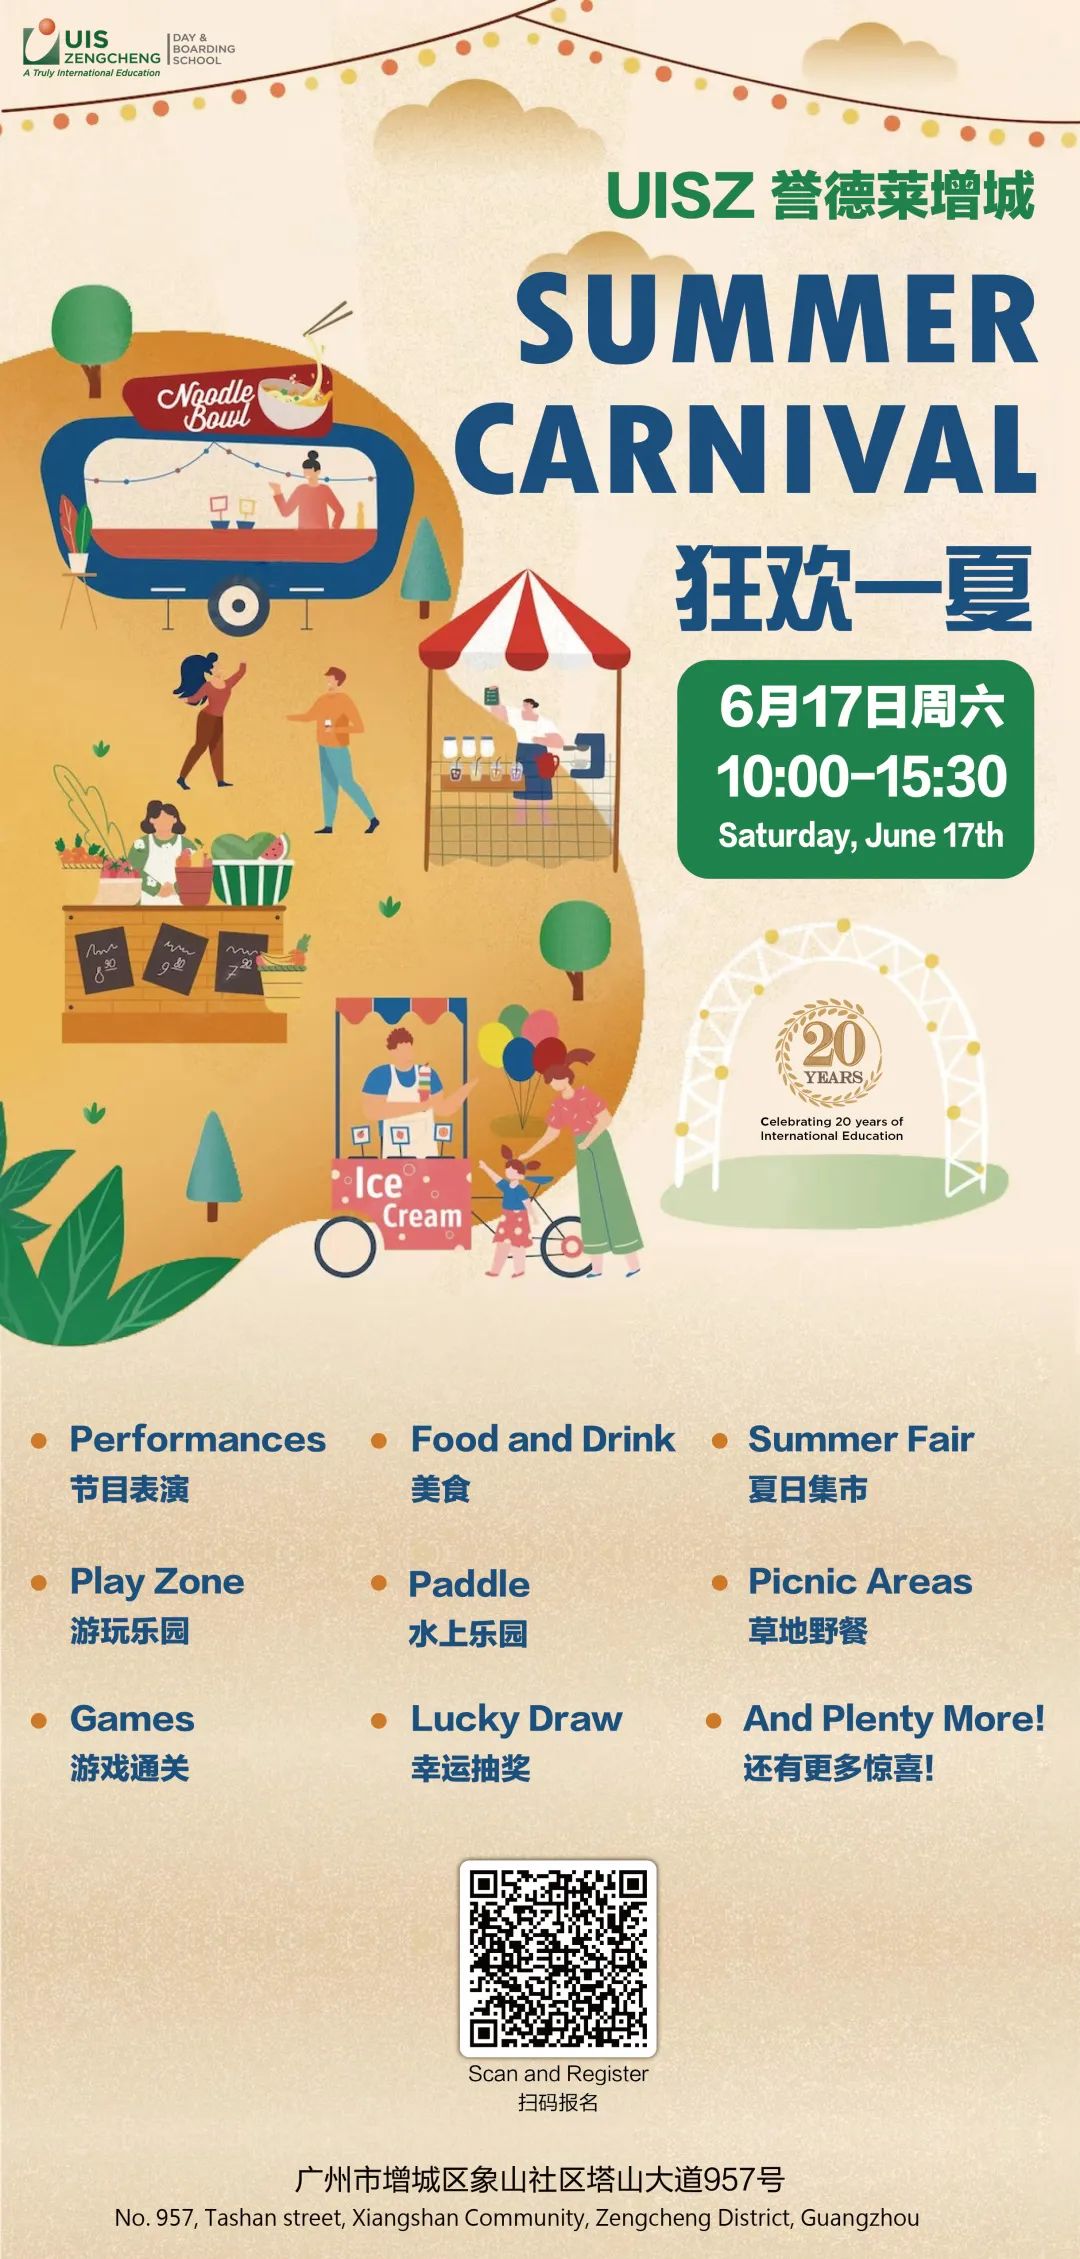 UISZ Summer Carnival | 誉德莱增城夏日嘉年华：让我们一起狂欢一“夏”！